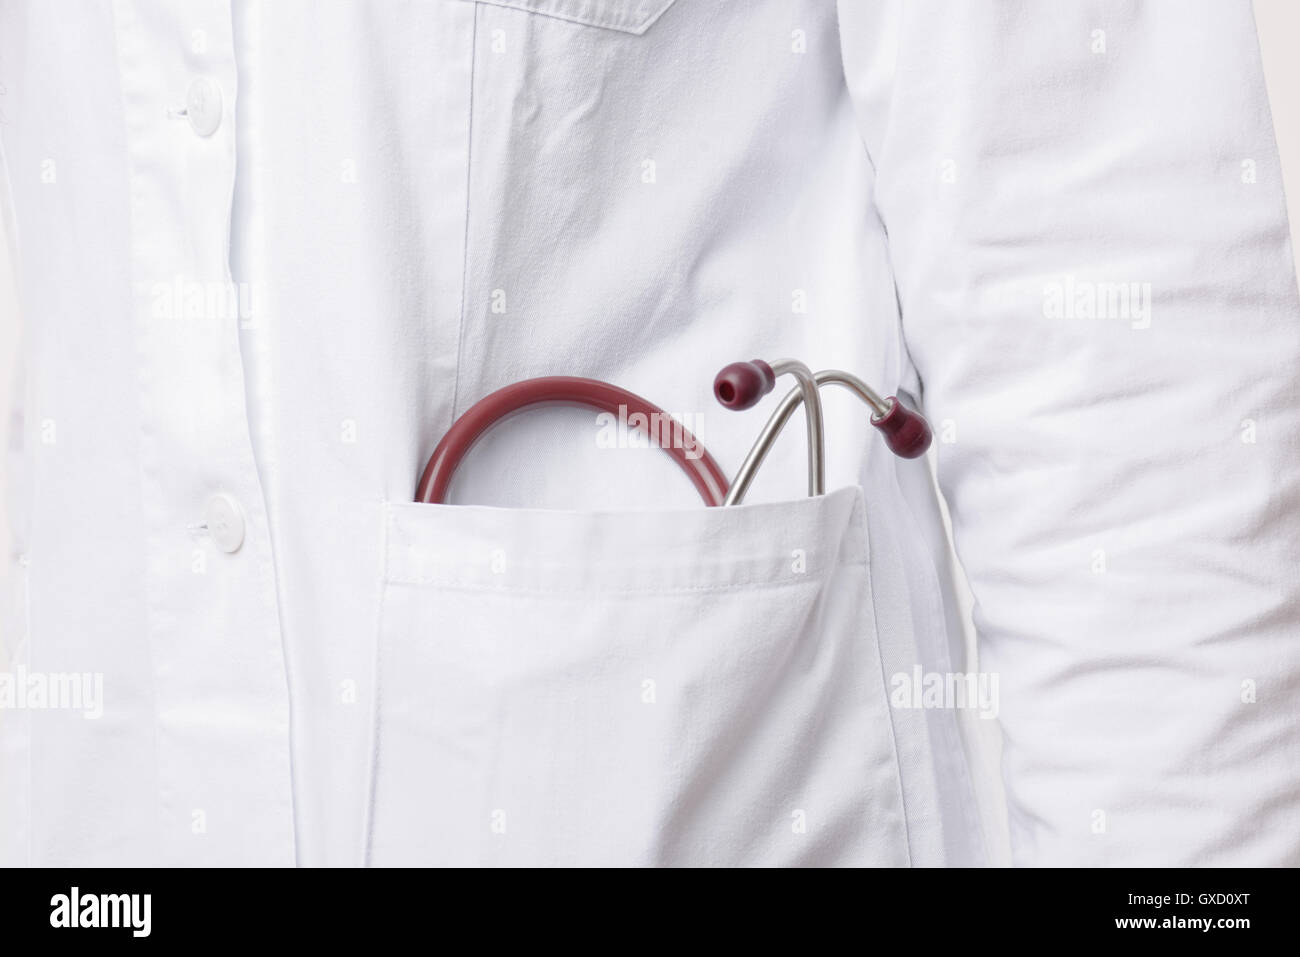 Close up of stethoscope in lab coat pocket Banque D'Images